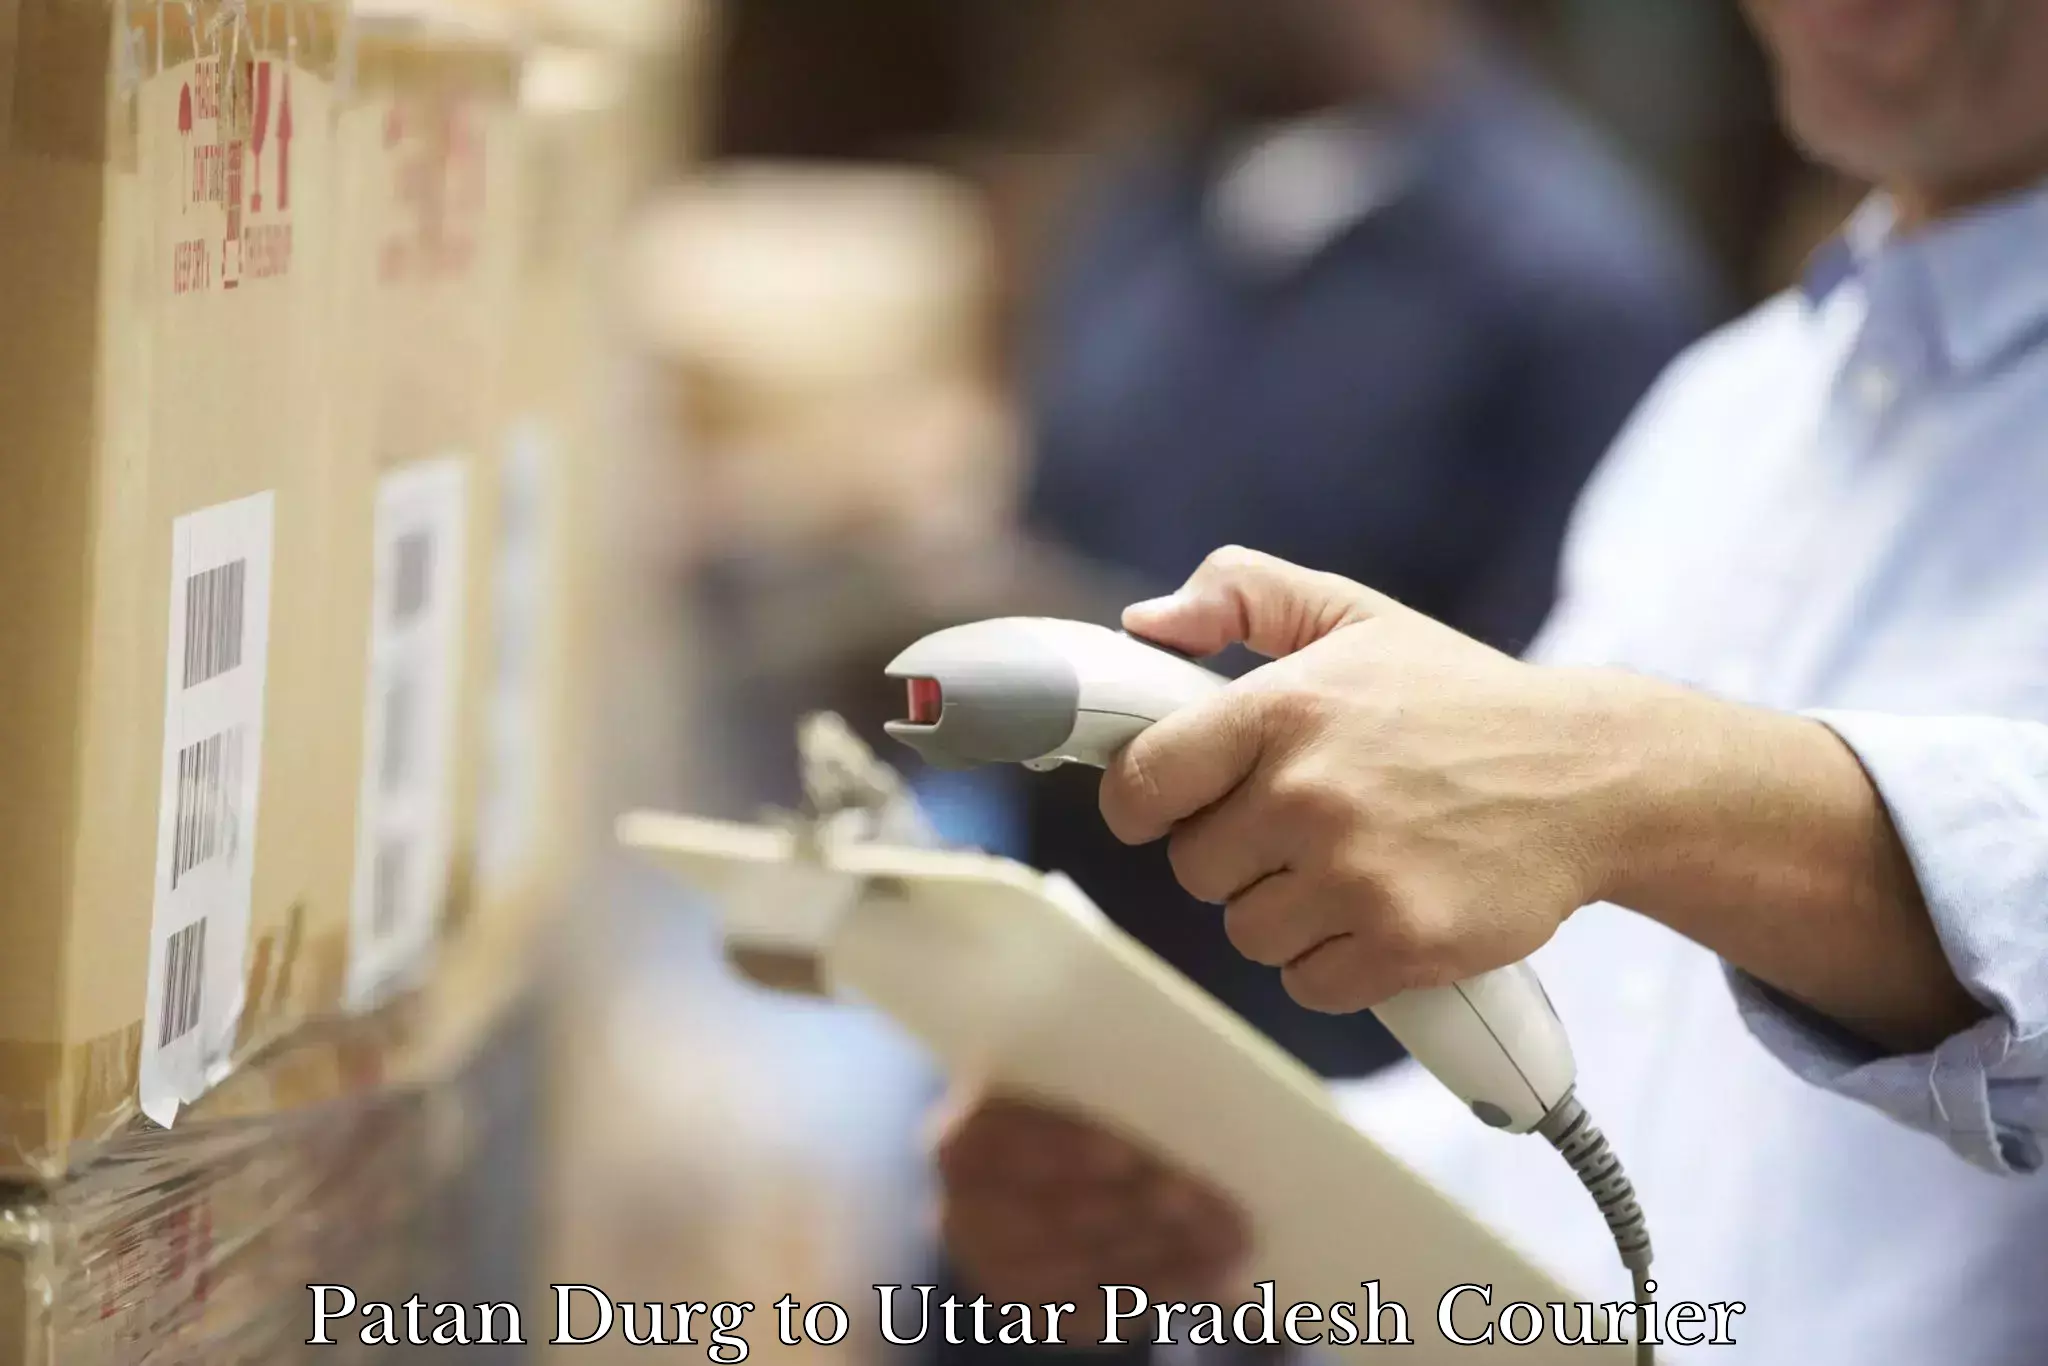 Professional courier handling Patan Durg to Bidhuna